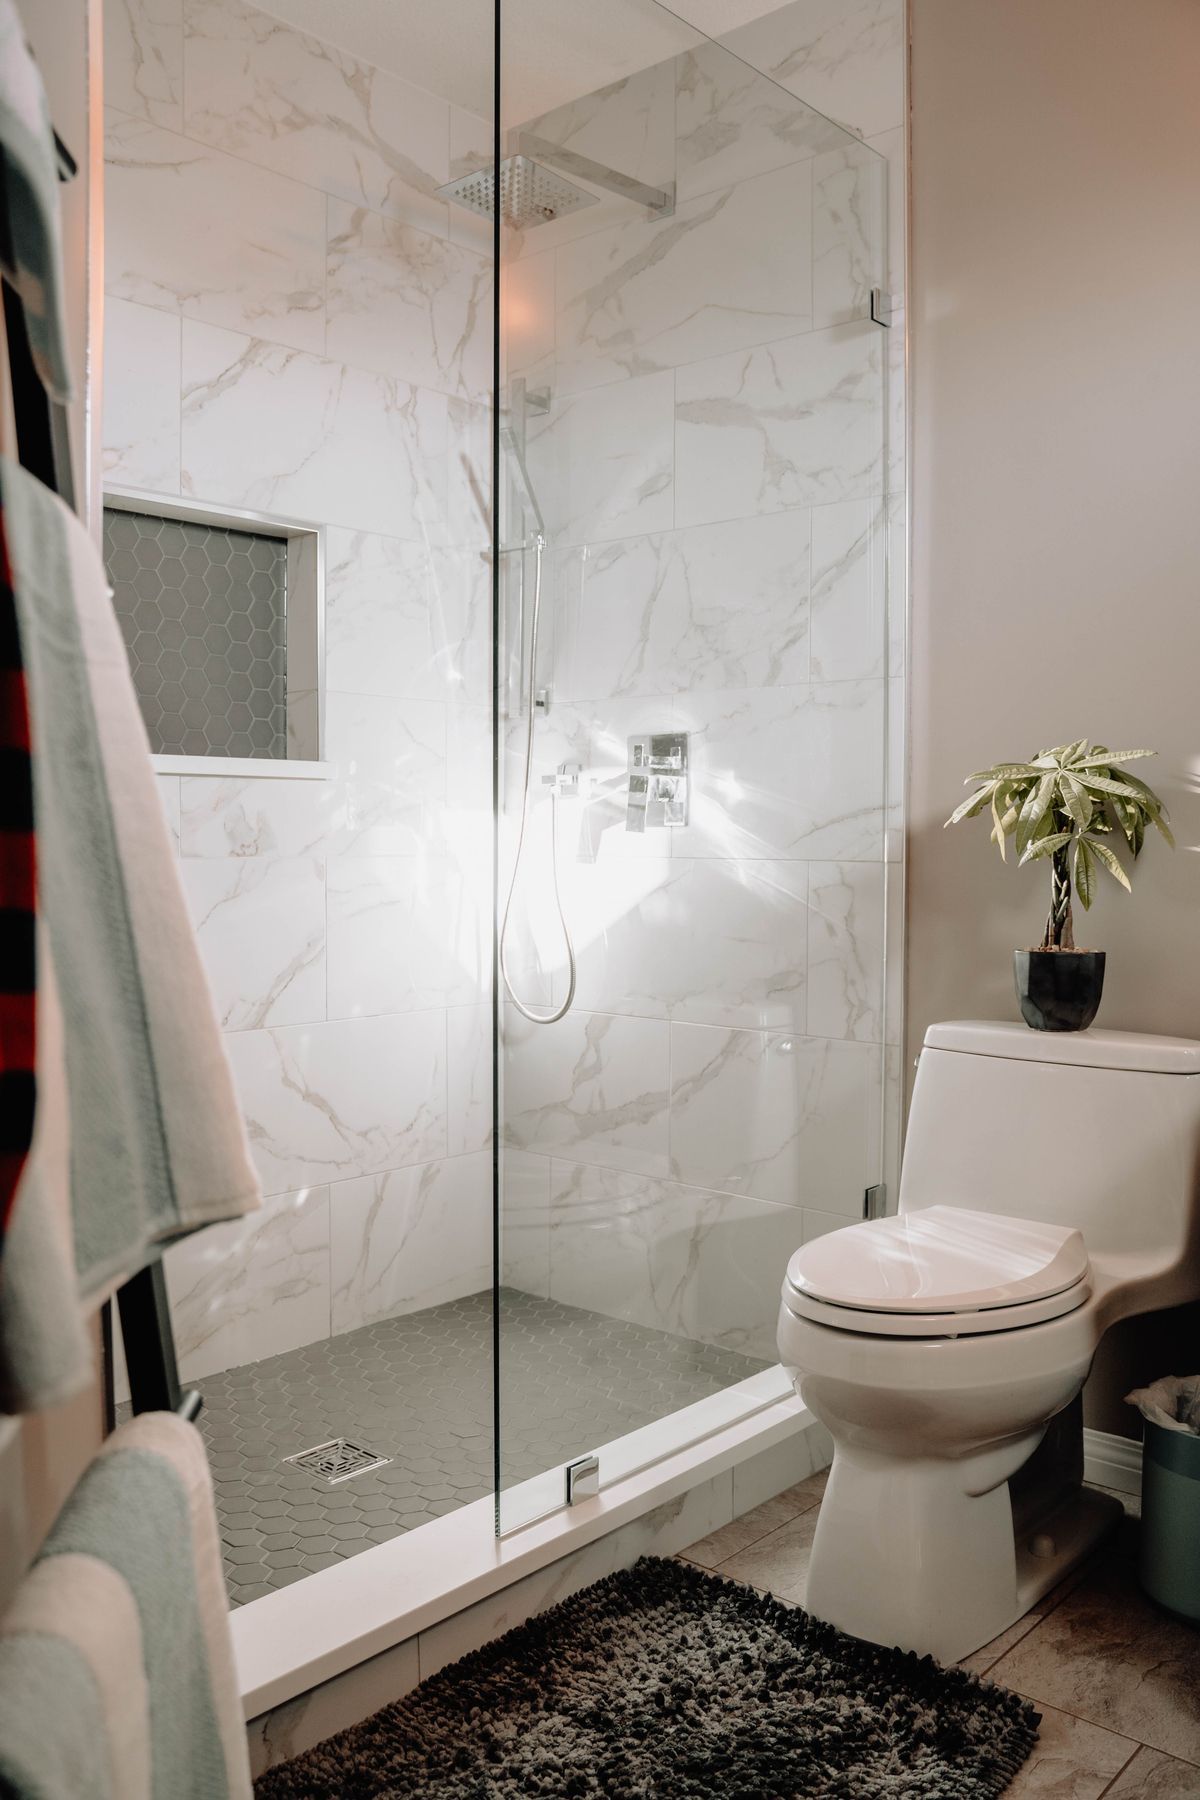 Bathroom wiht large glass shower